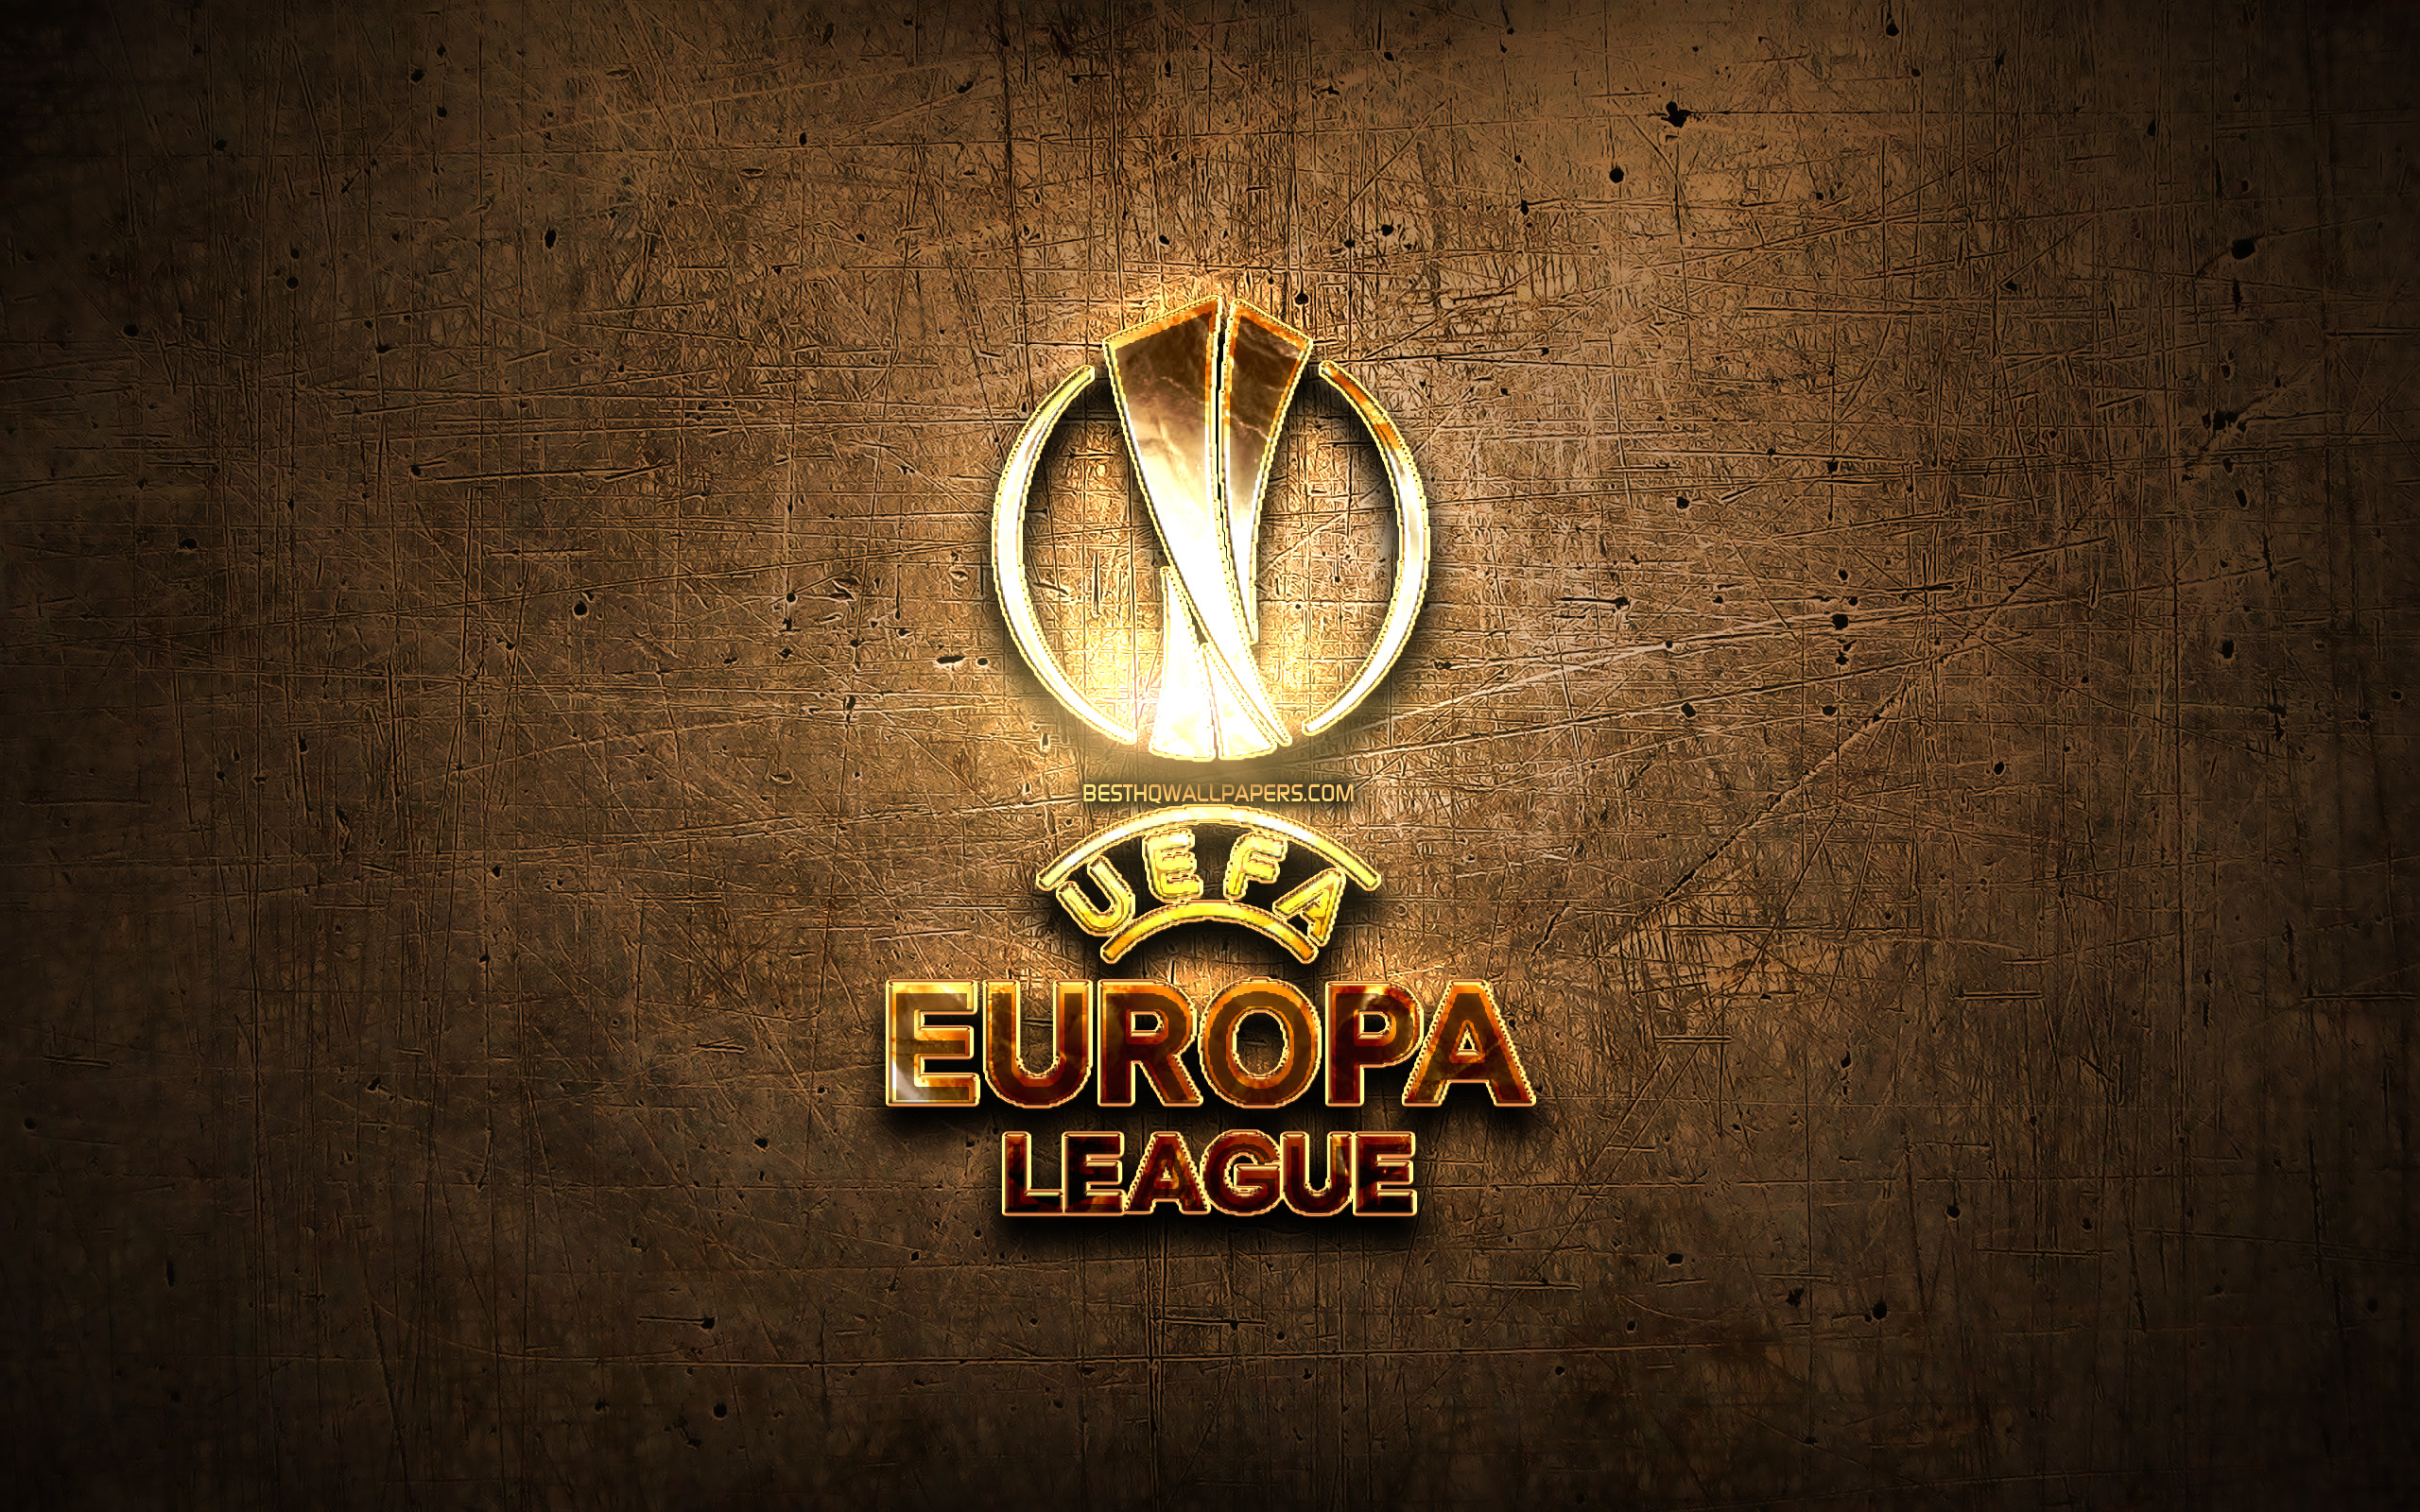 Europa League Wallpapers - Wallpaper Cave